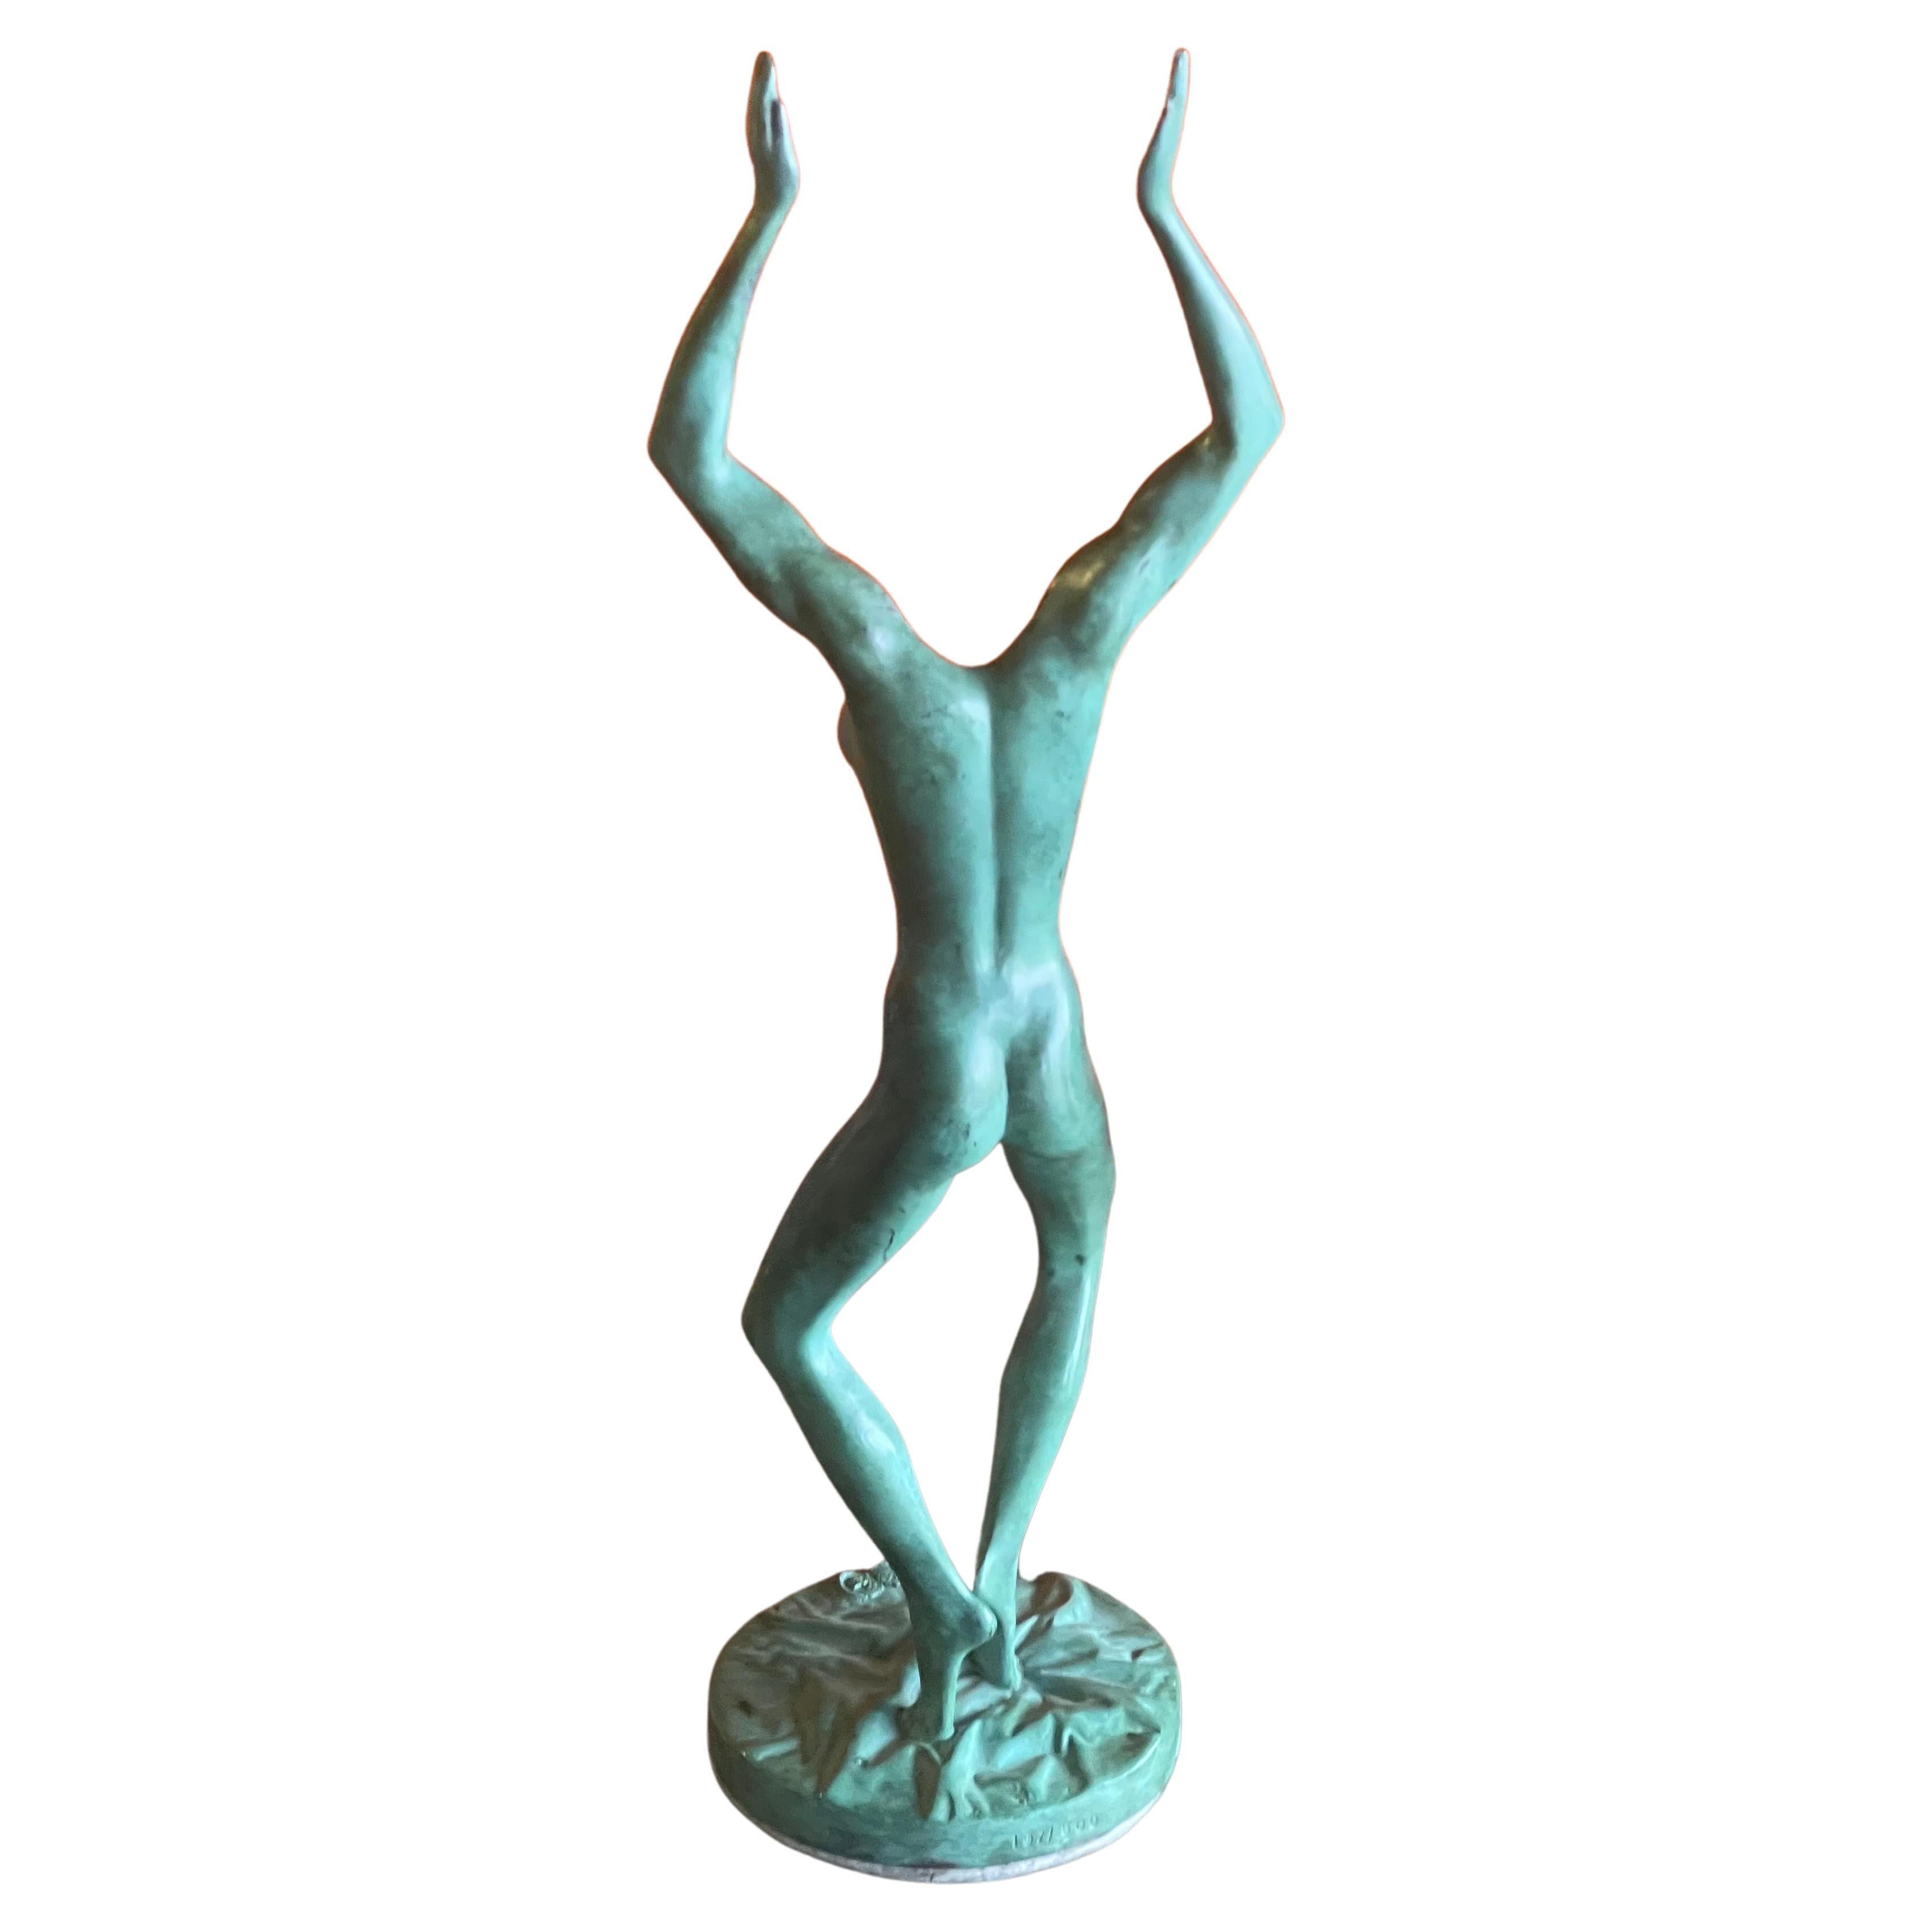 A very interesting patinated bronze figurative sculpture by Venturi Arte Bologna, circa 1980s. The piece has a wonderful verdigris patina and measures 4.5